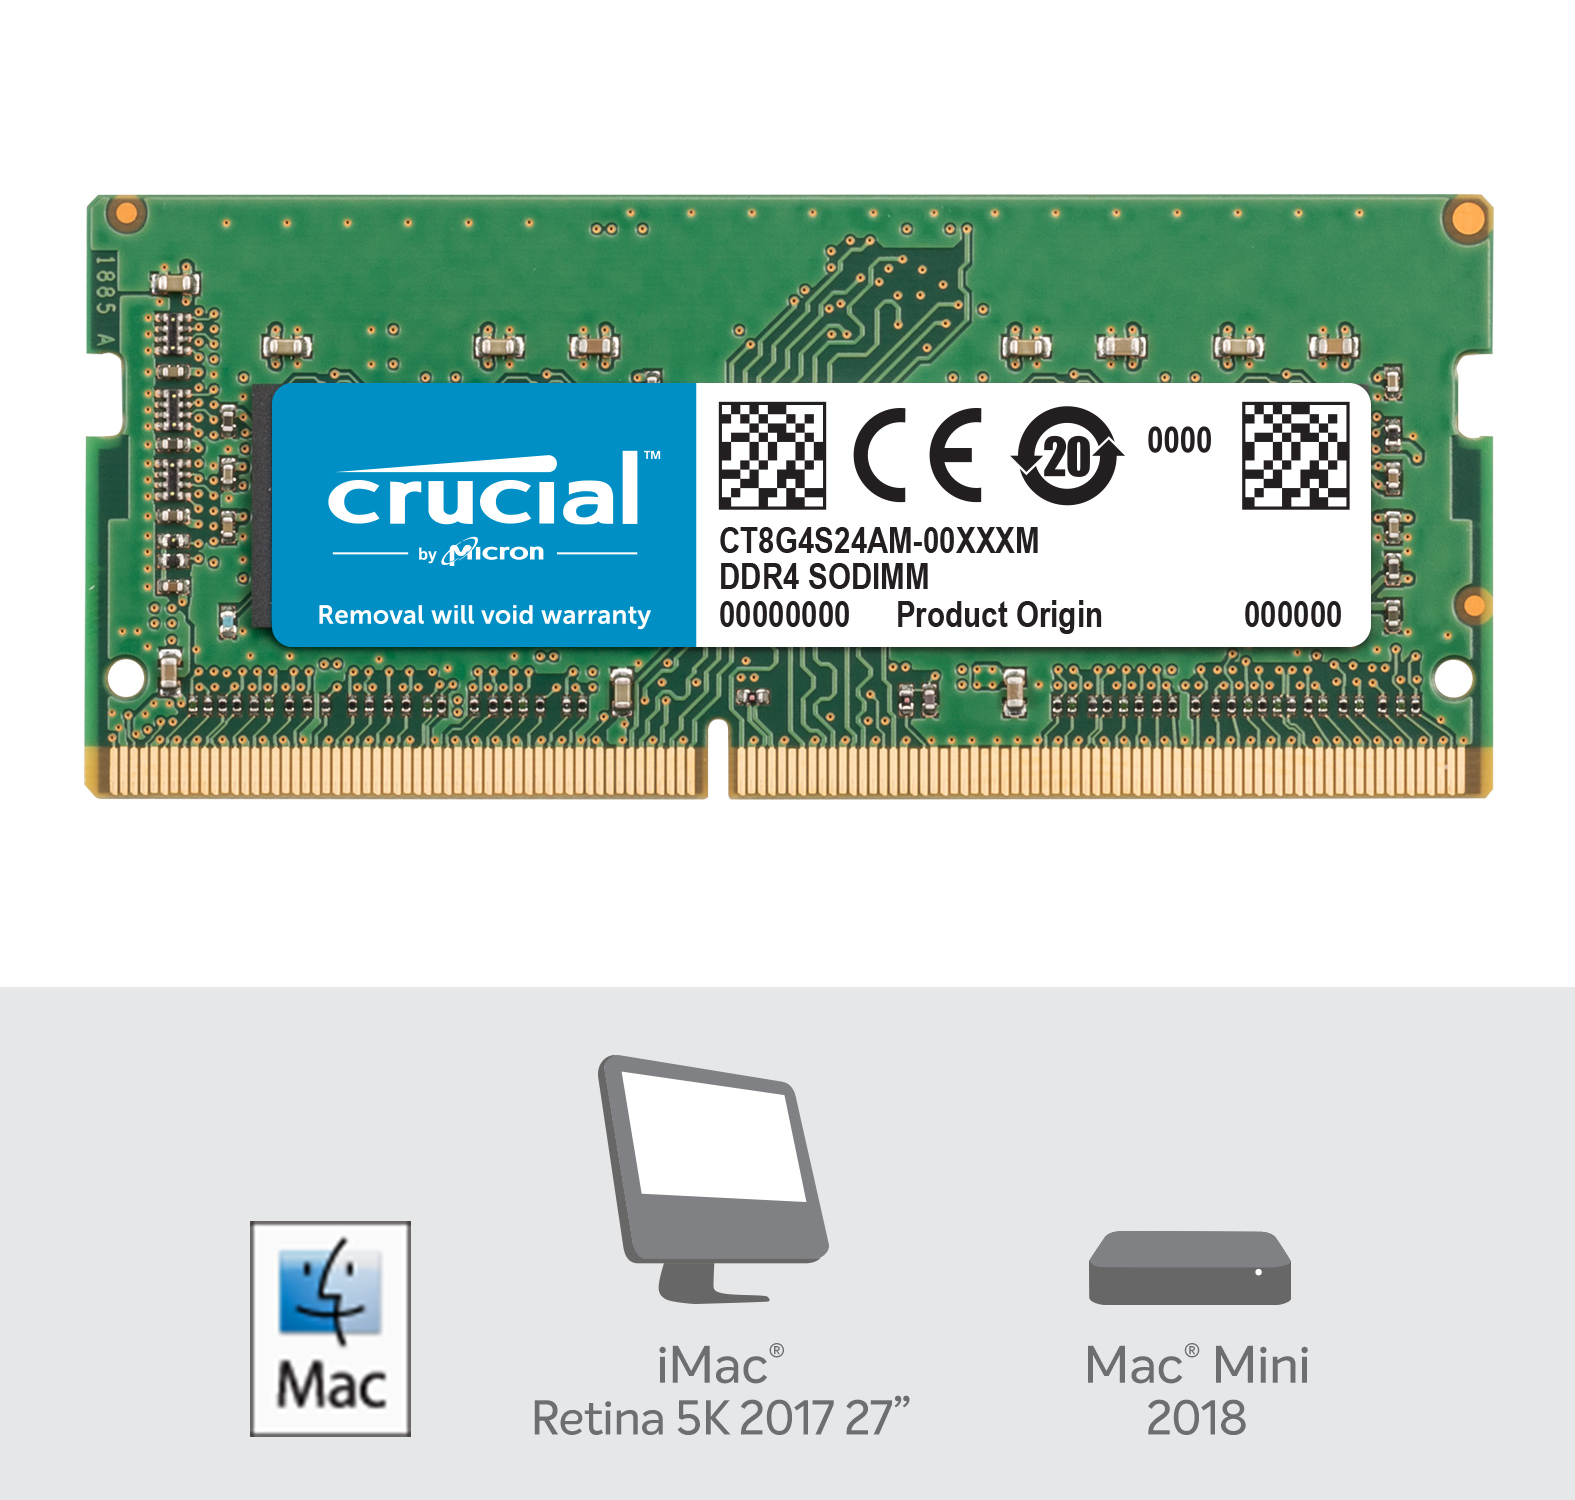 Crucial 8GB DDR4-2400 SODIMM Memory for Mac, CT8G4S24AM